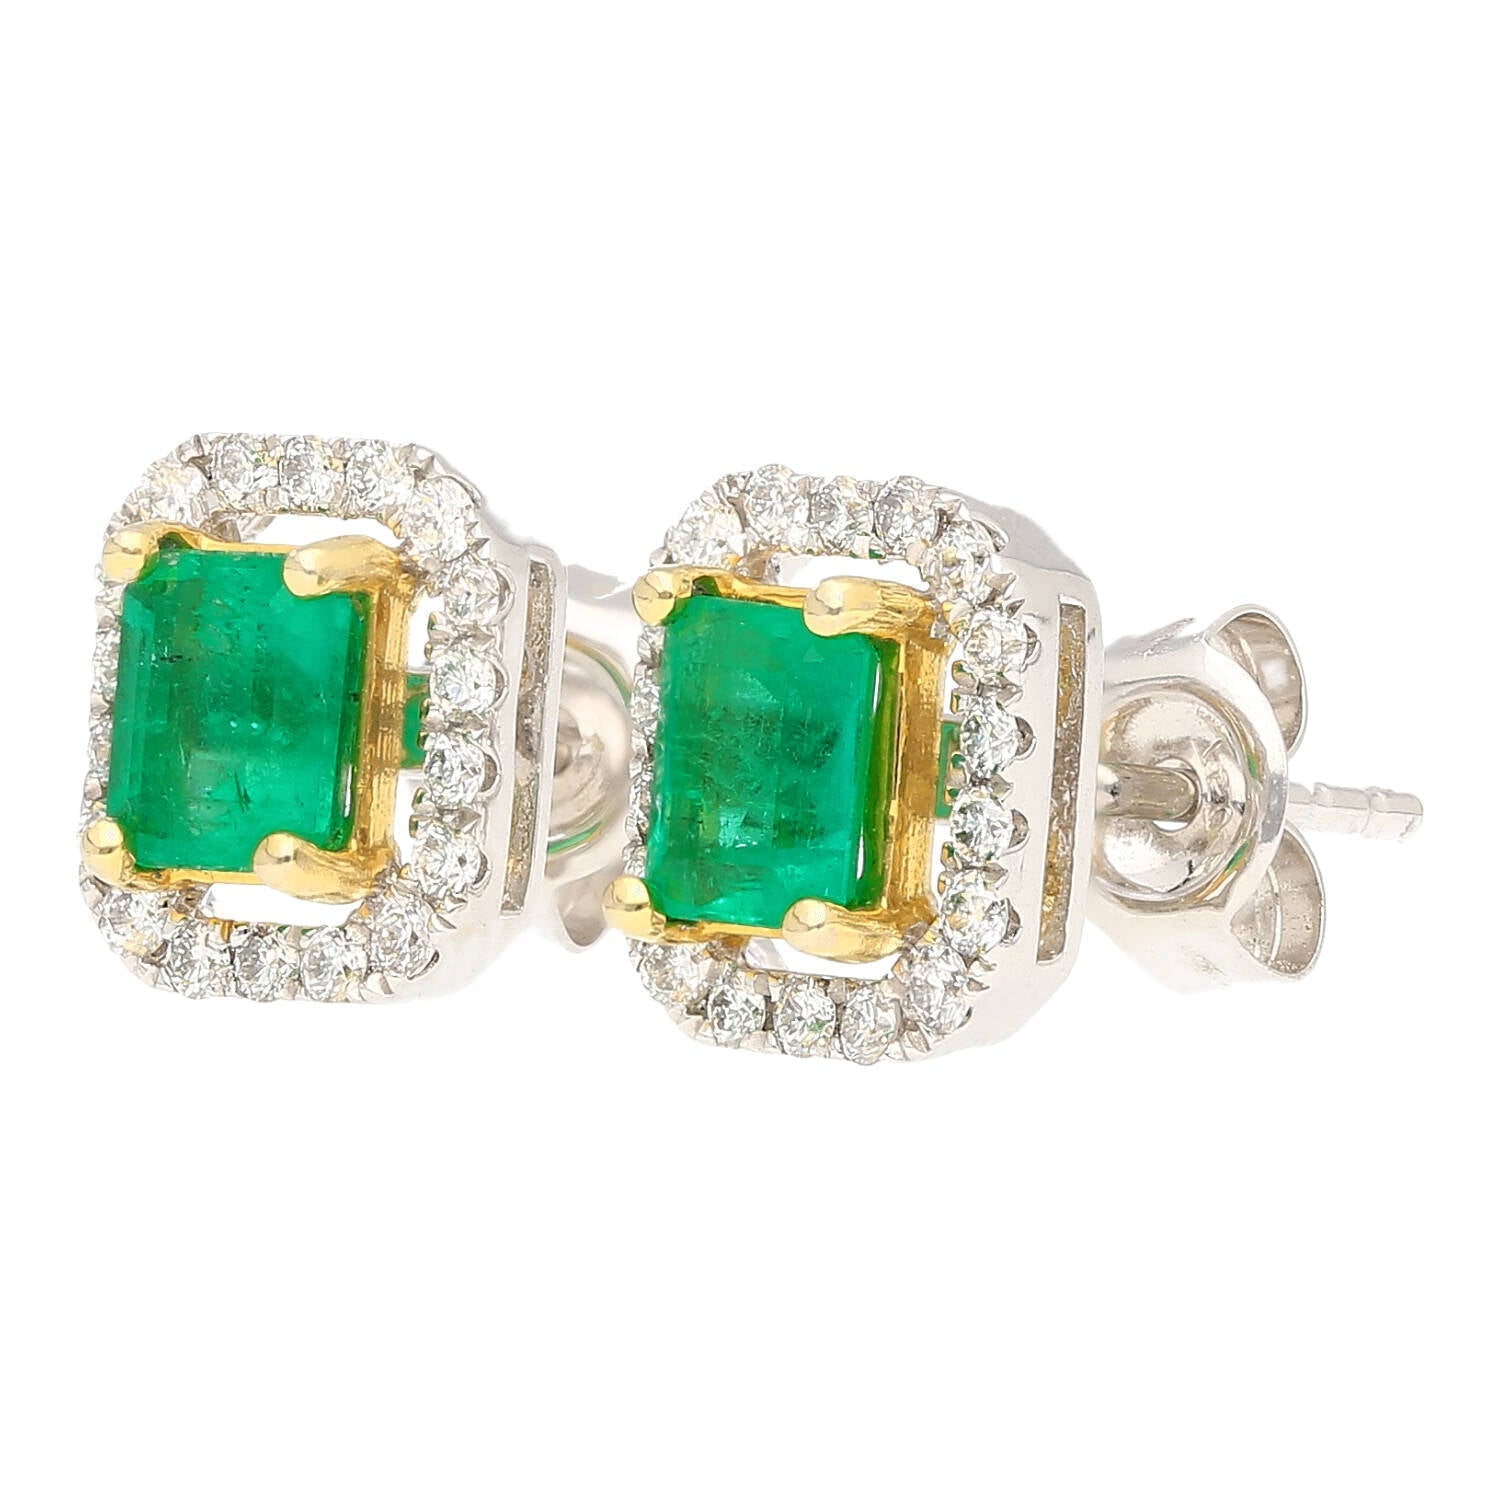 Natural-Emerald-and-Diamond-Halo-Stud-Earrings-in-18K-White-Gold-Earrings-2.jpg